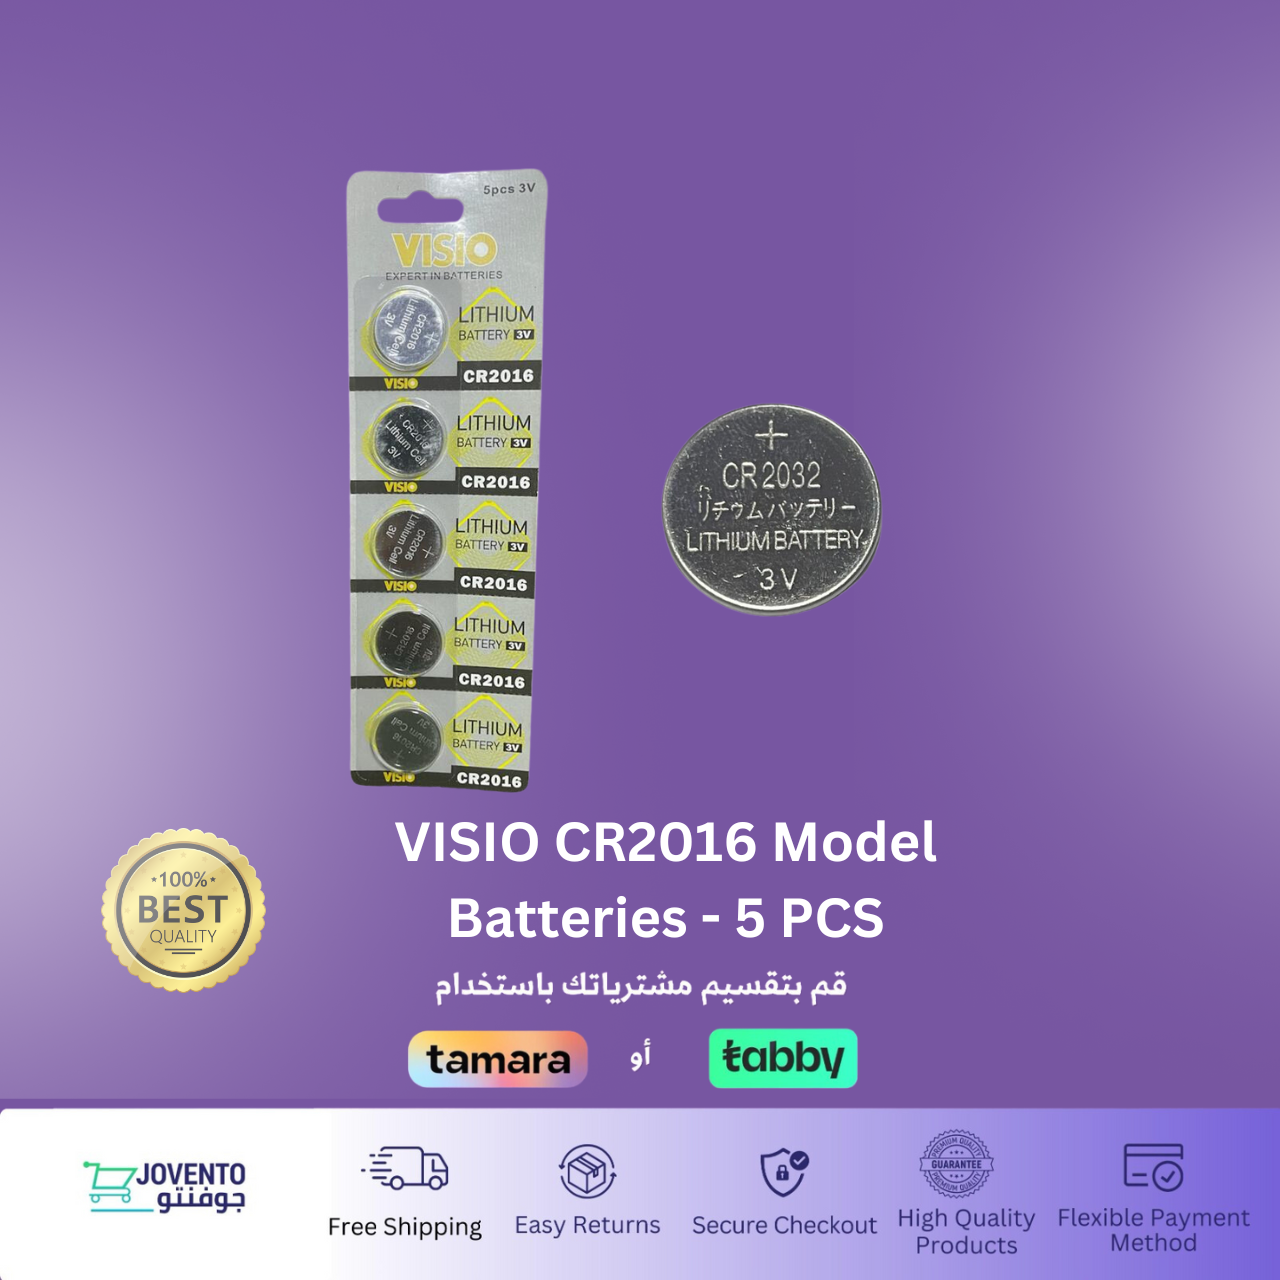 VISIO CR2016 Model Batteries - 5 PCS